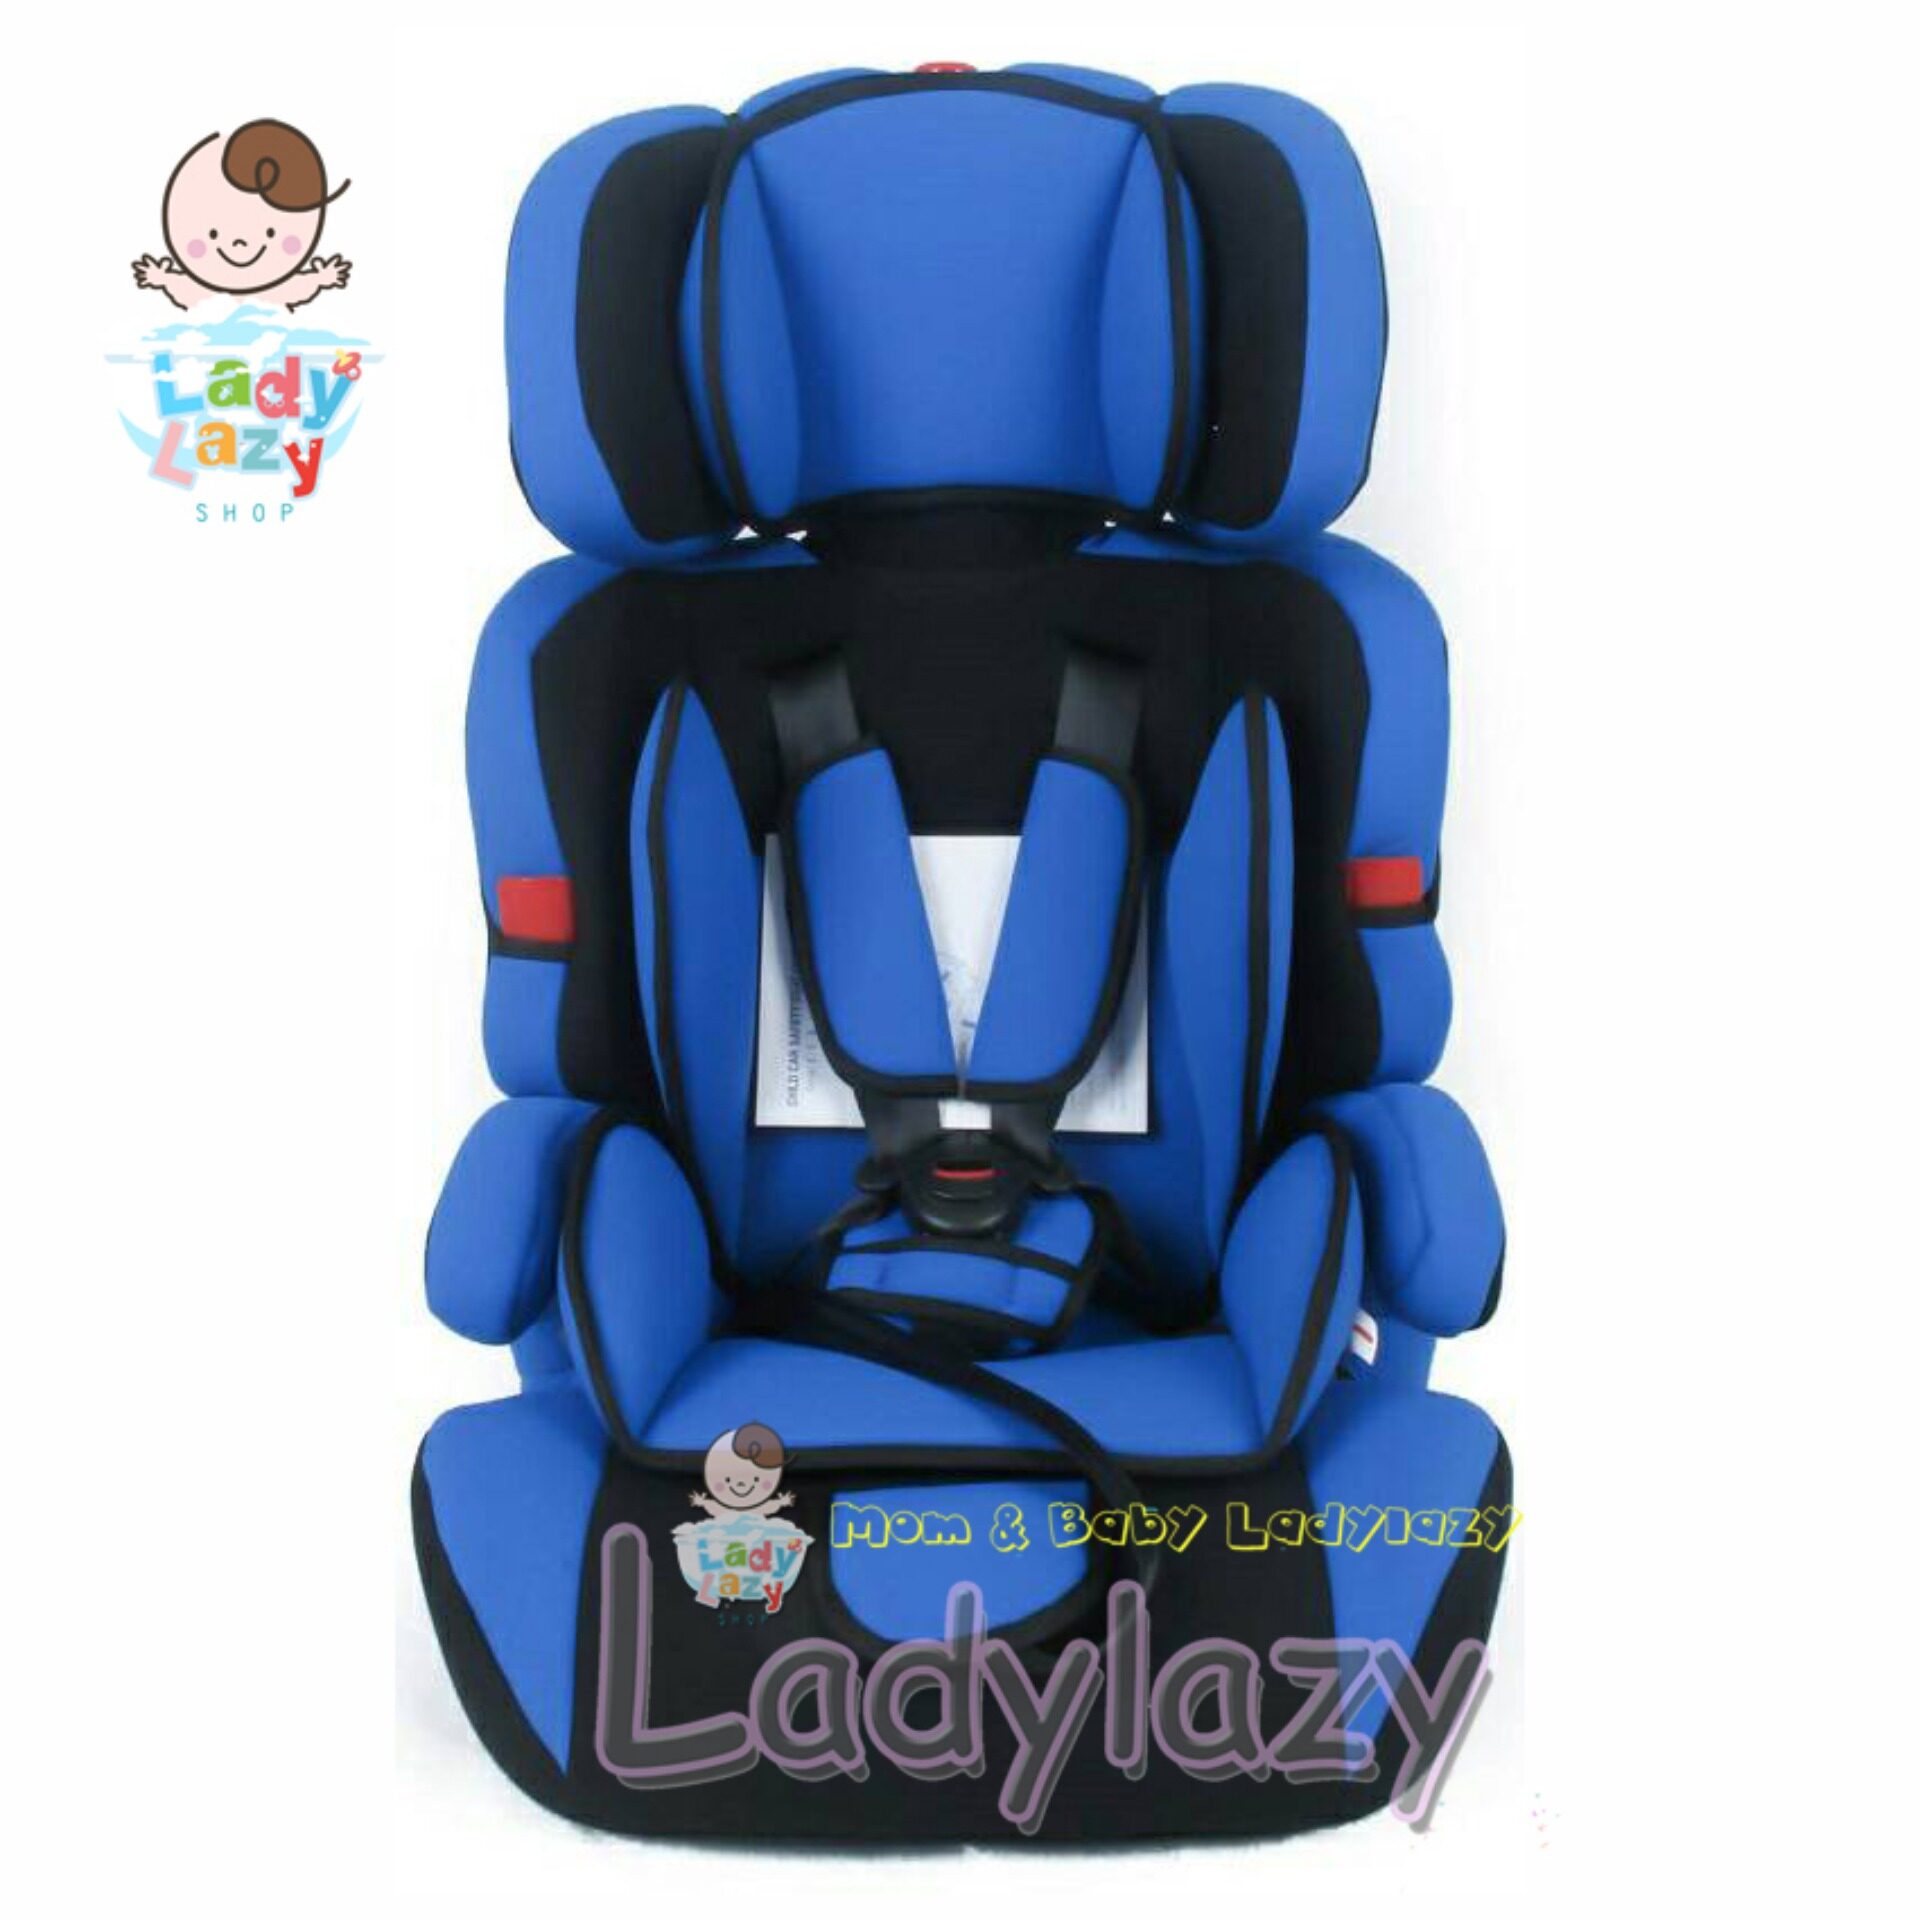 ladylazyคาร์ซีท(car seat) ที่นั่งในรถยนต์ขนาดใหญ่ No.SQ303 สีน้ำเงิน